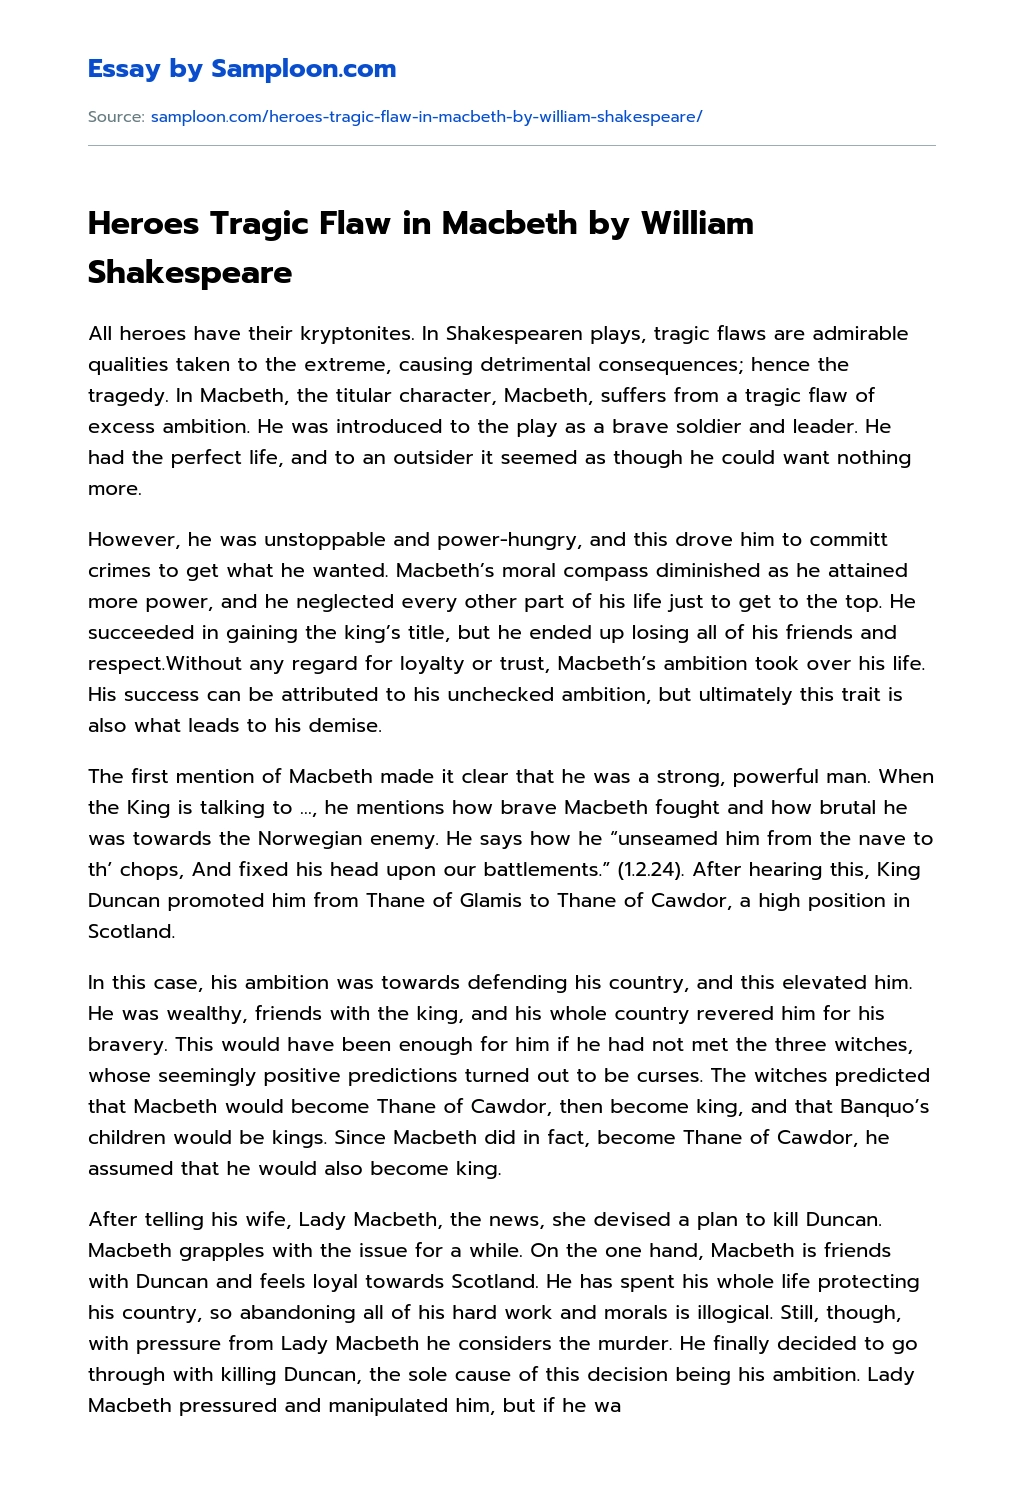 Heroes Tragic Flaw in Macbeth by William Shakespeare essay